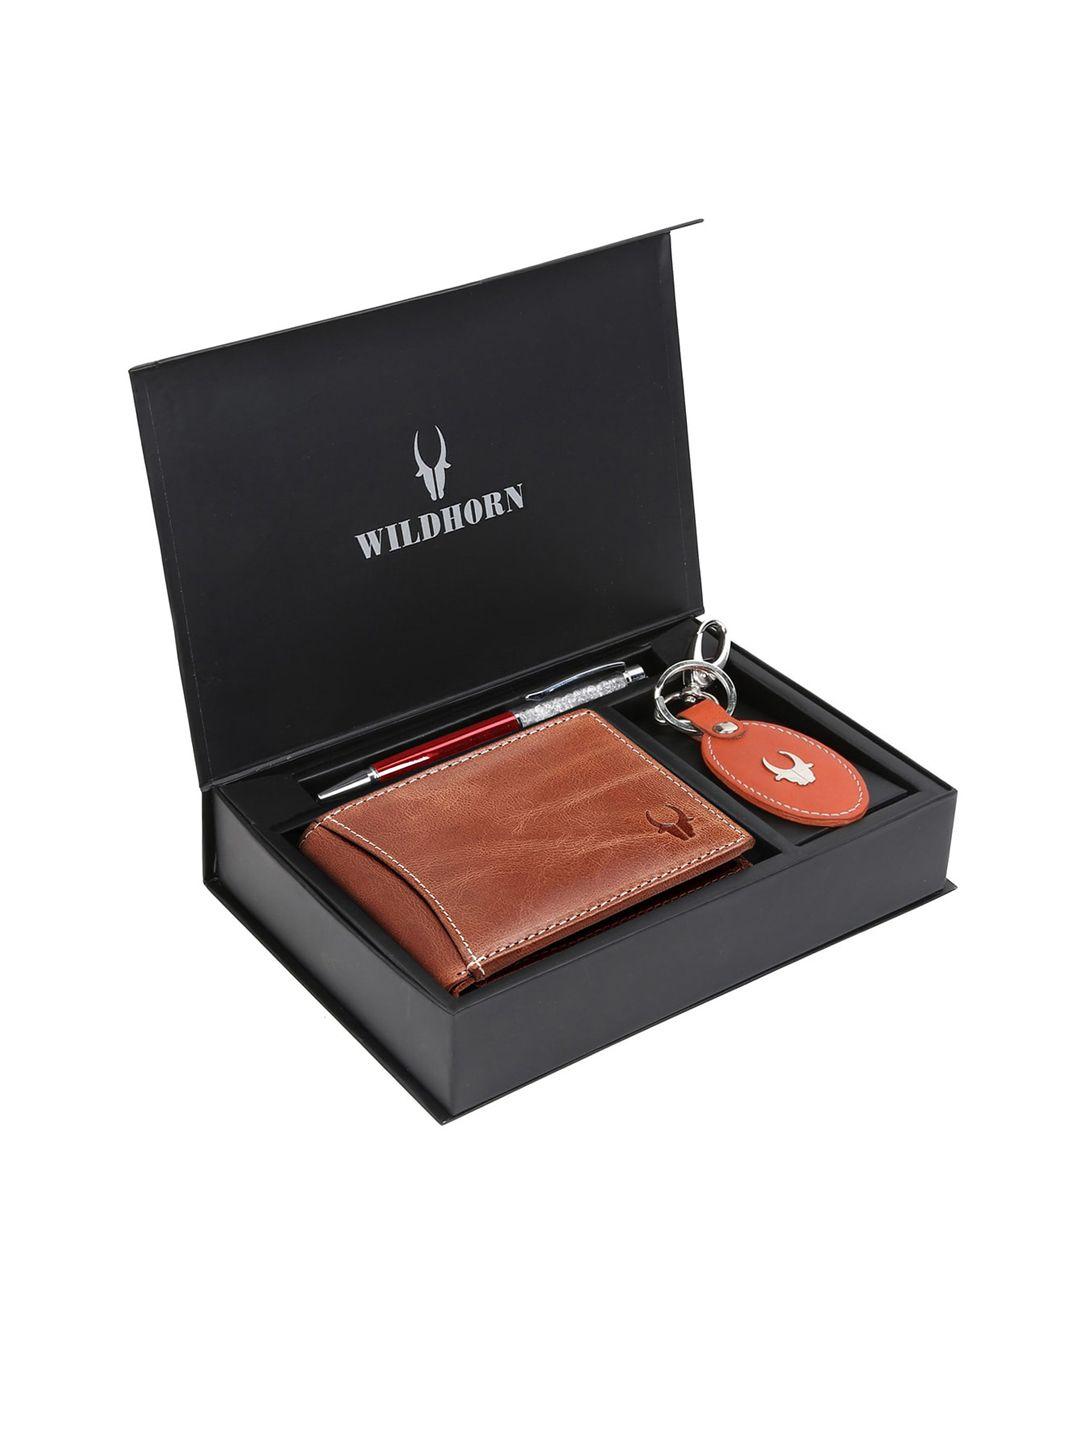 wildhorn men tan brown & orange rfid protected genuine leather wallet & pen accessory gift set